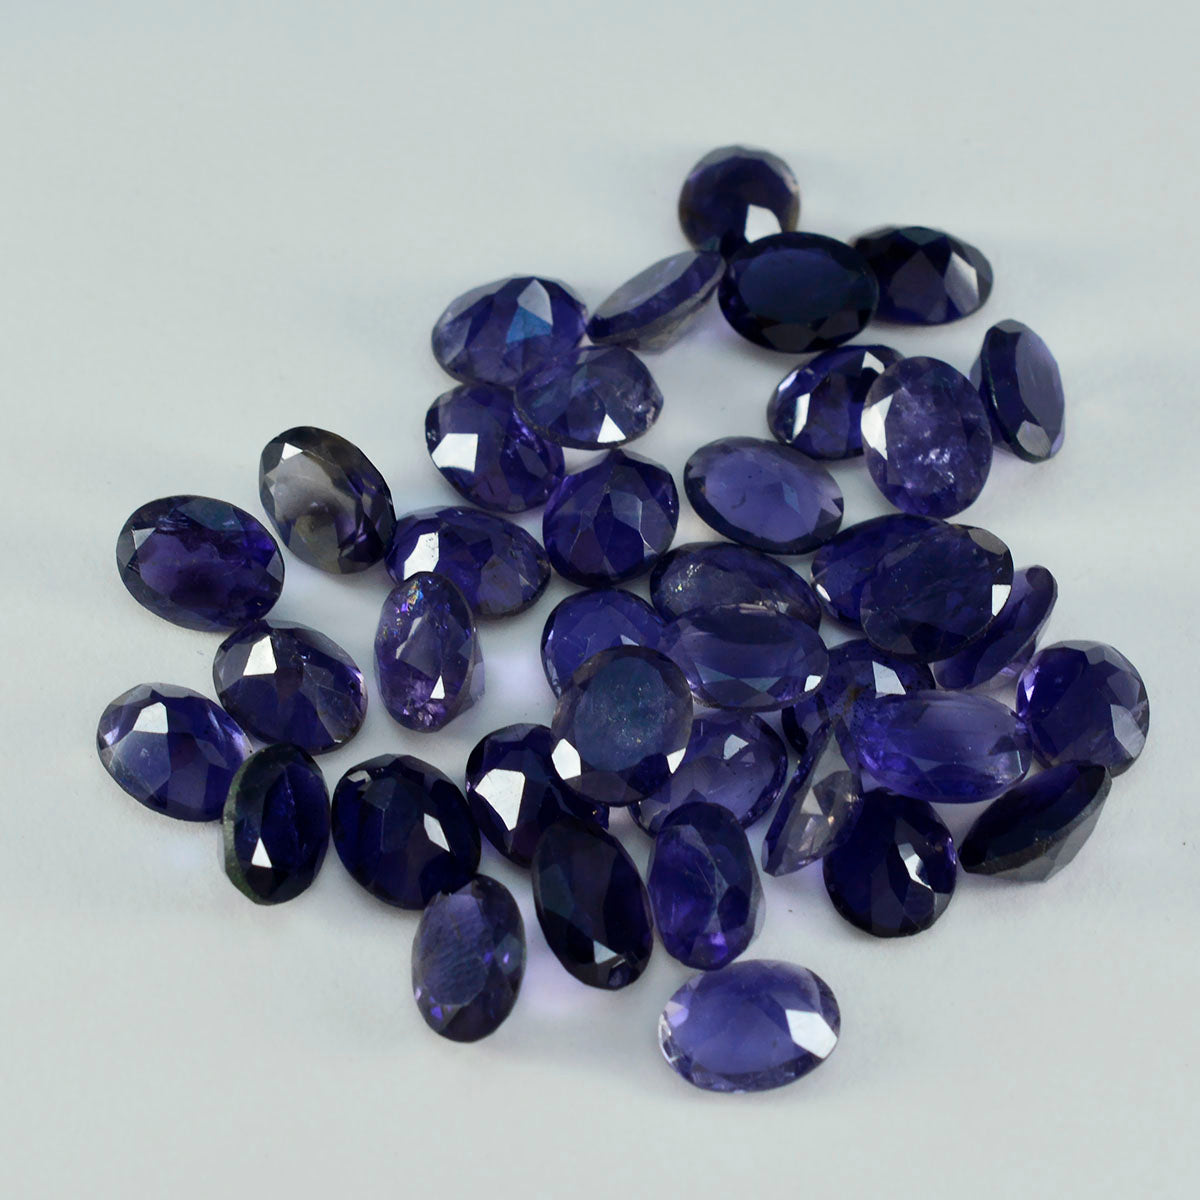 Riyogems 1PC Blue Iolite Faceted 5x7 mm Oval Shape amazing Quality Gems